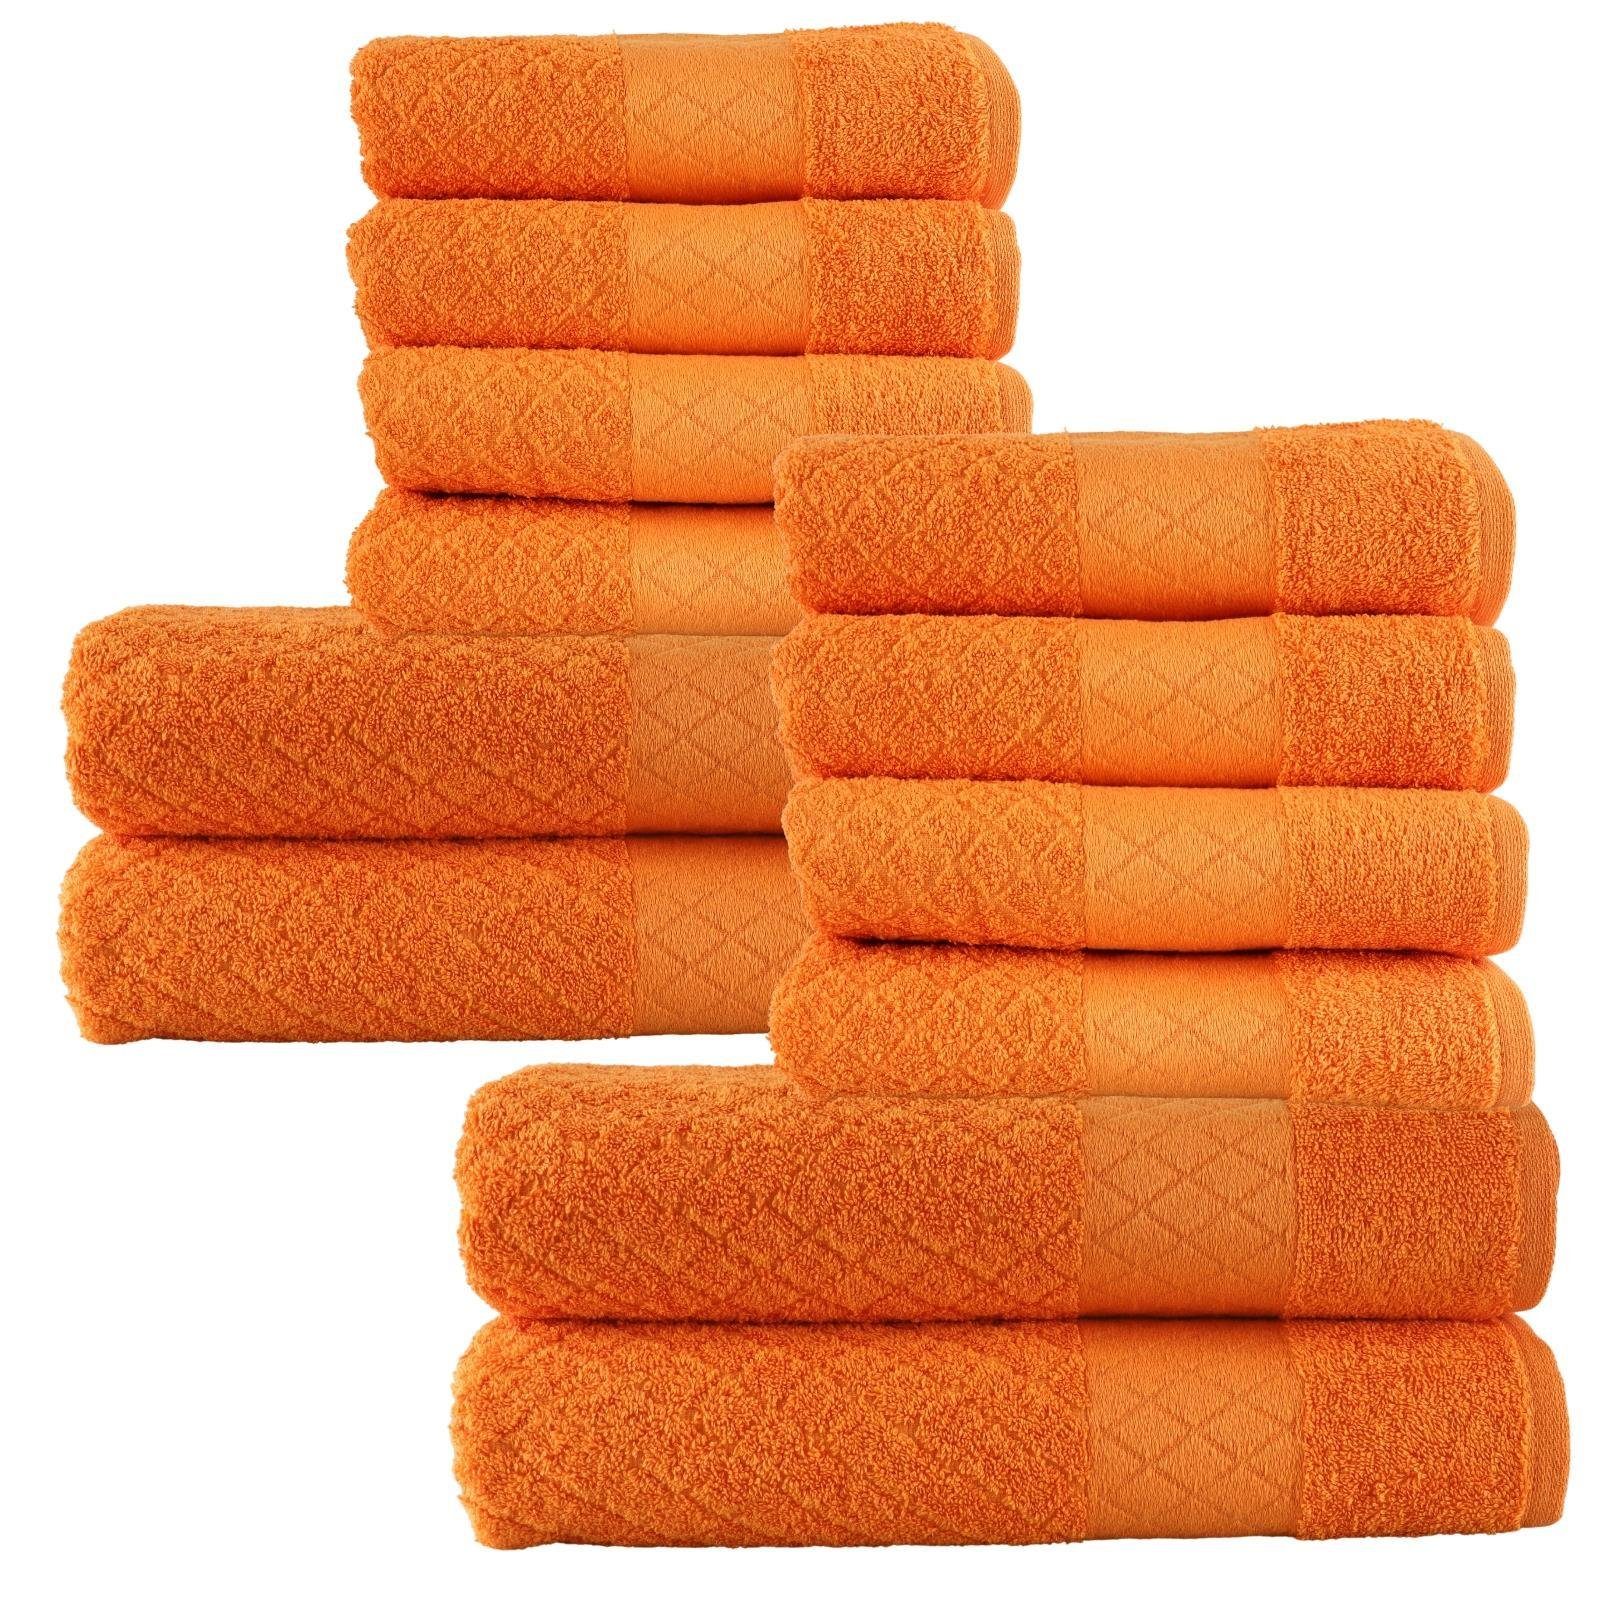 Duschtücher 100% Handtuch Badetuch Hand- &Duschtuch Baumwolle, Frottee aus - Plentyfy Duschhandtuch 12tlg Set Baumwolle - 100% Set (12-St),